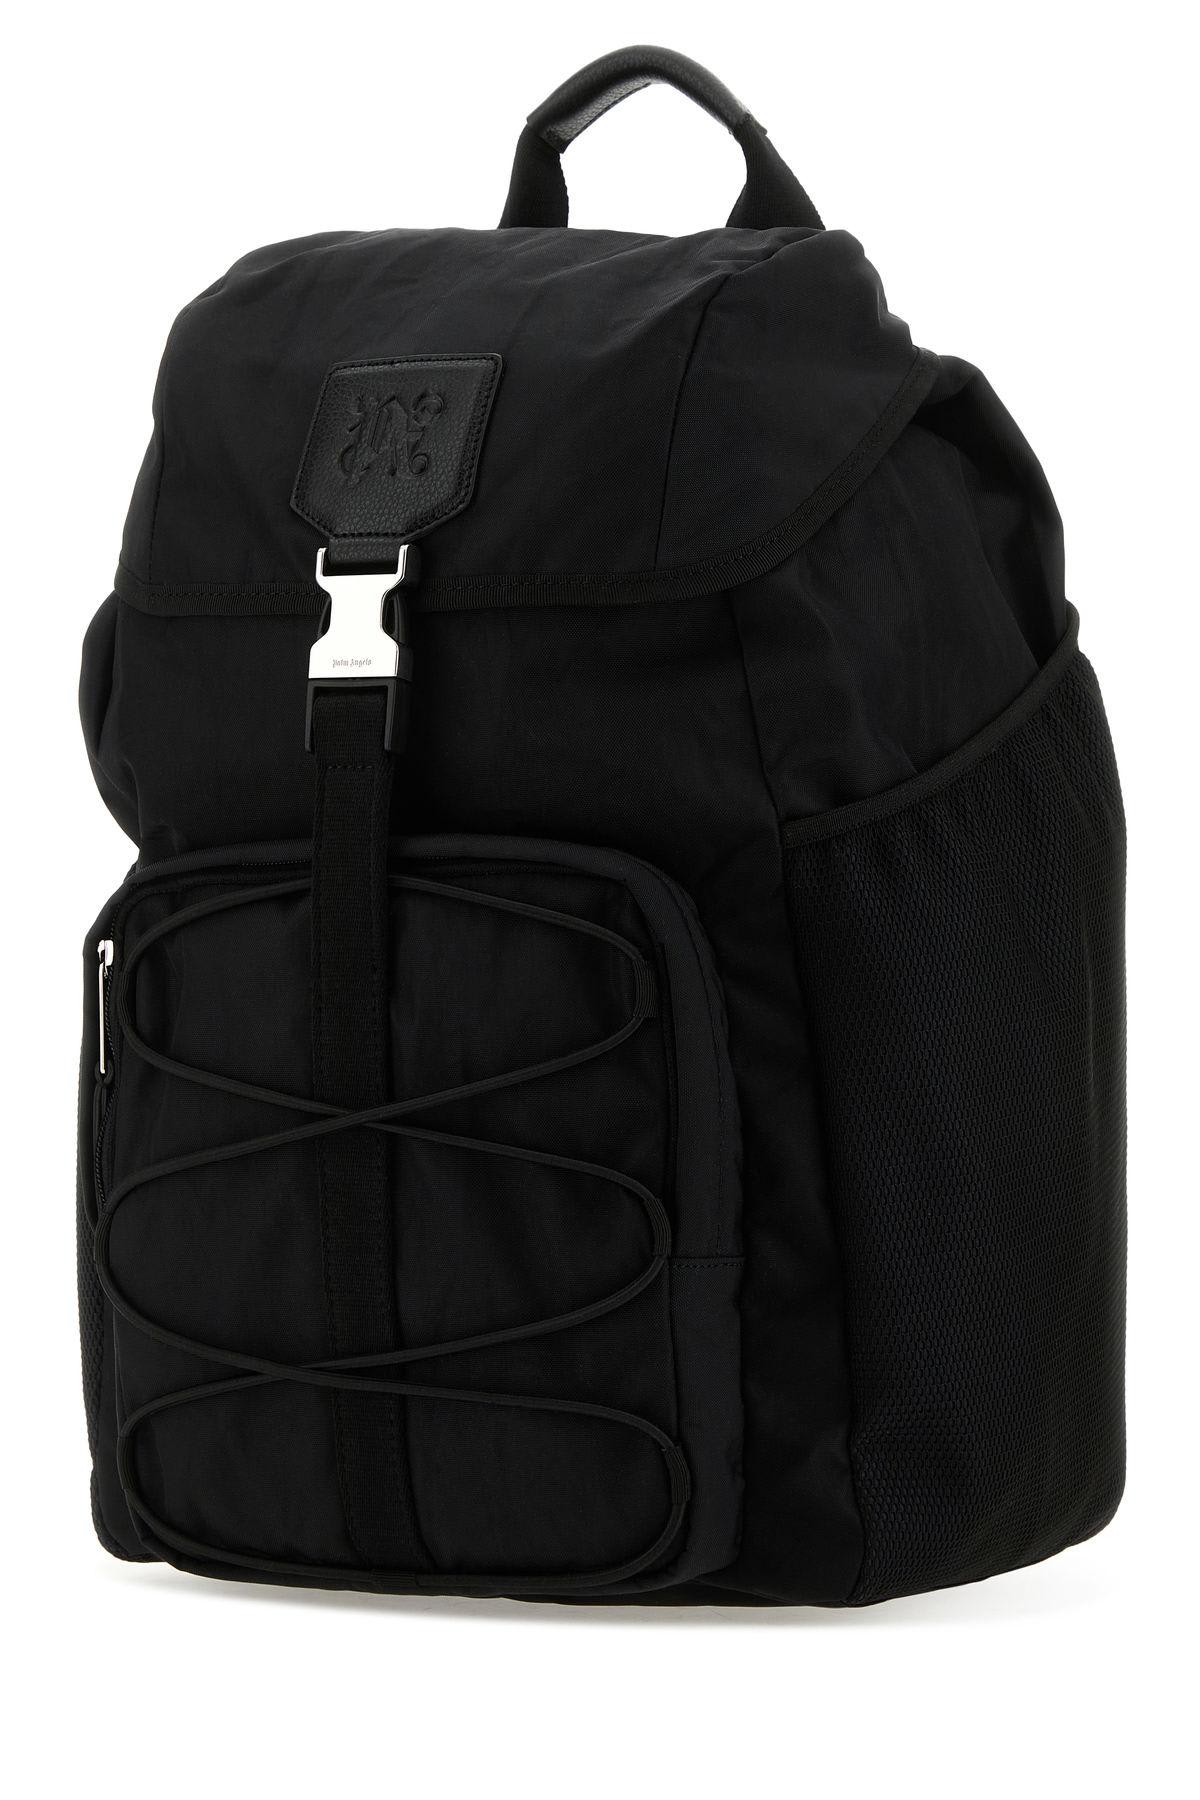 Shop Palm Angels Black Canvas Backpack